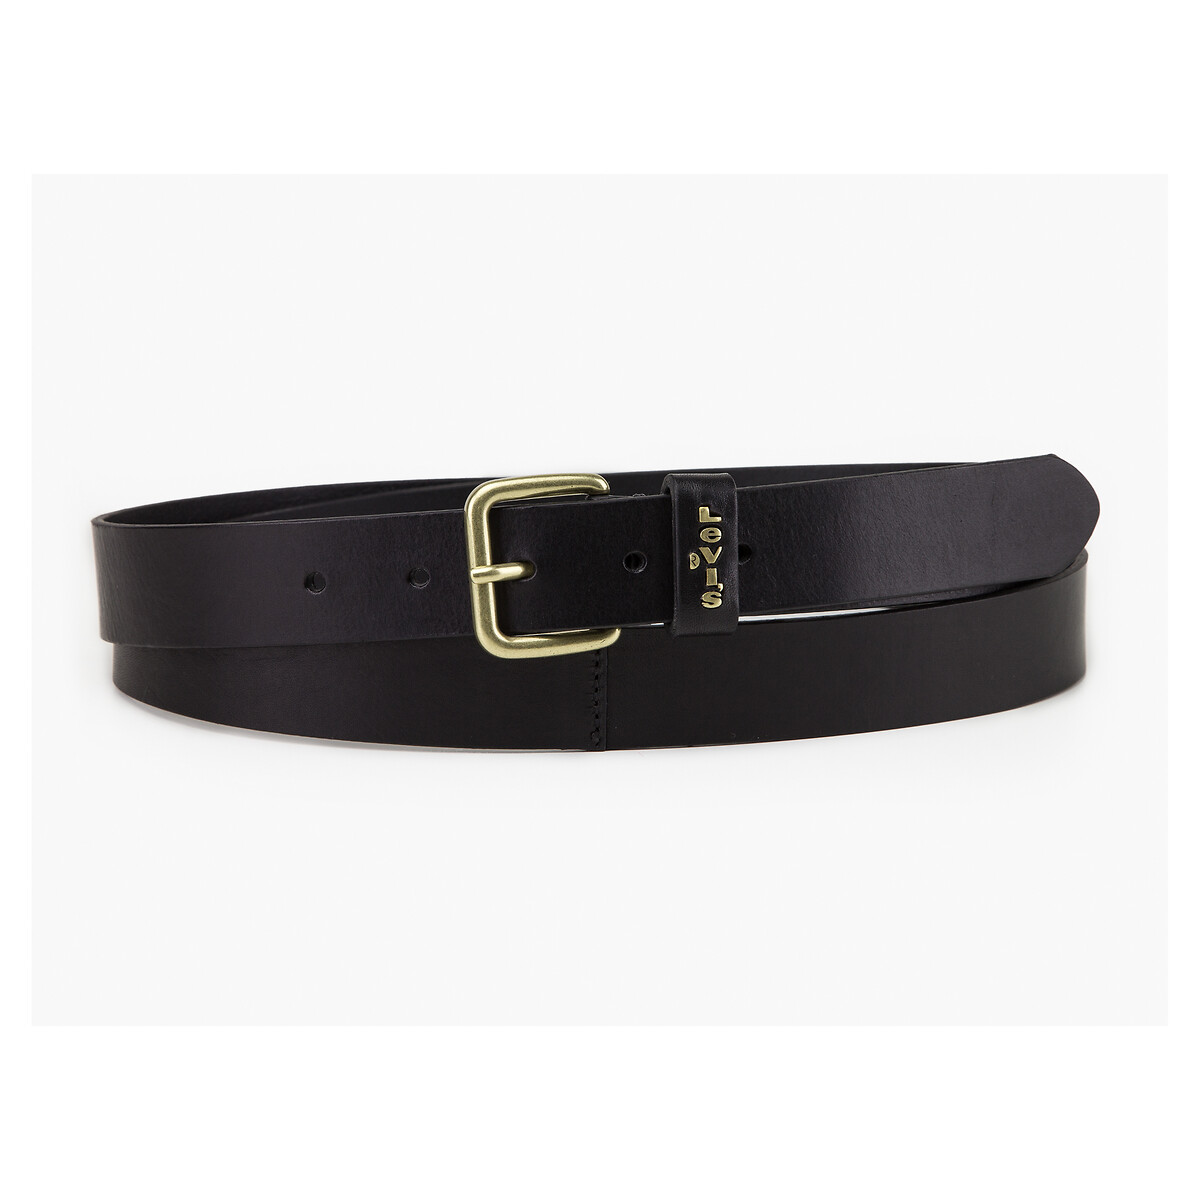 Calypso Plus Leather Belt